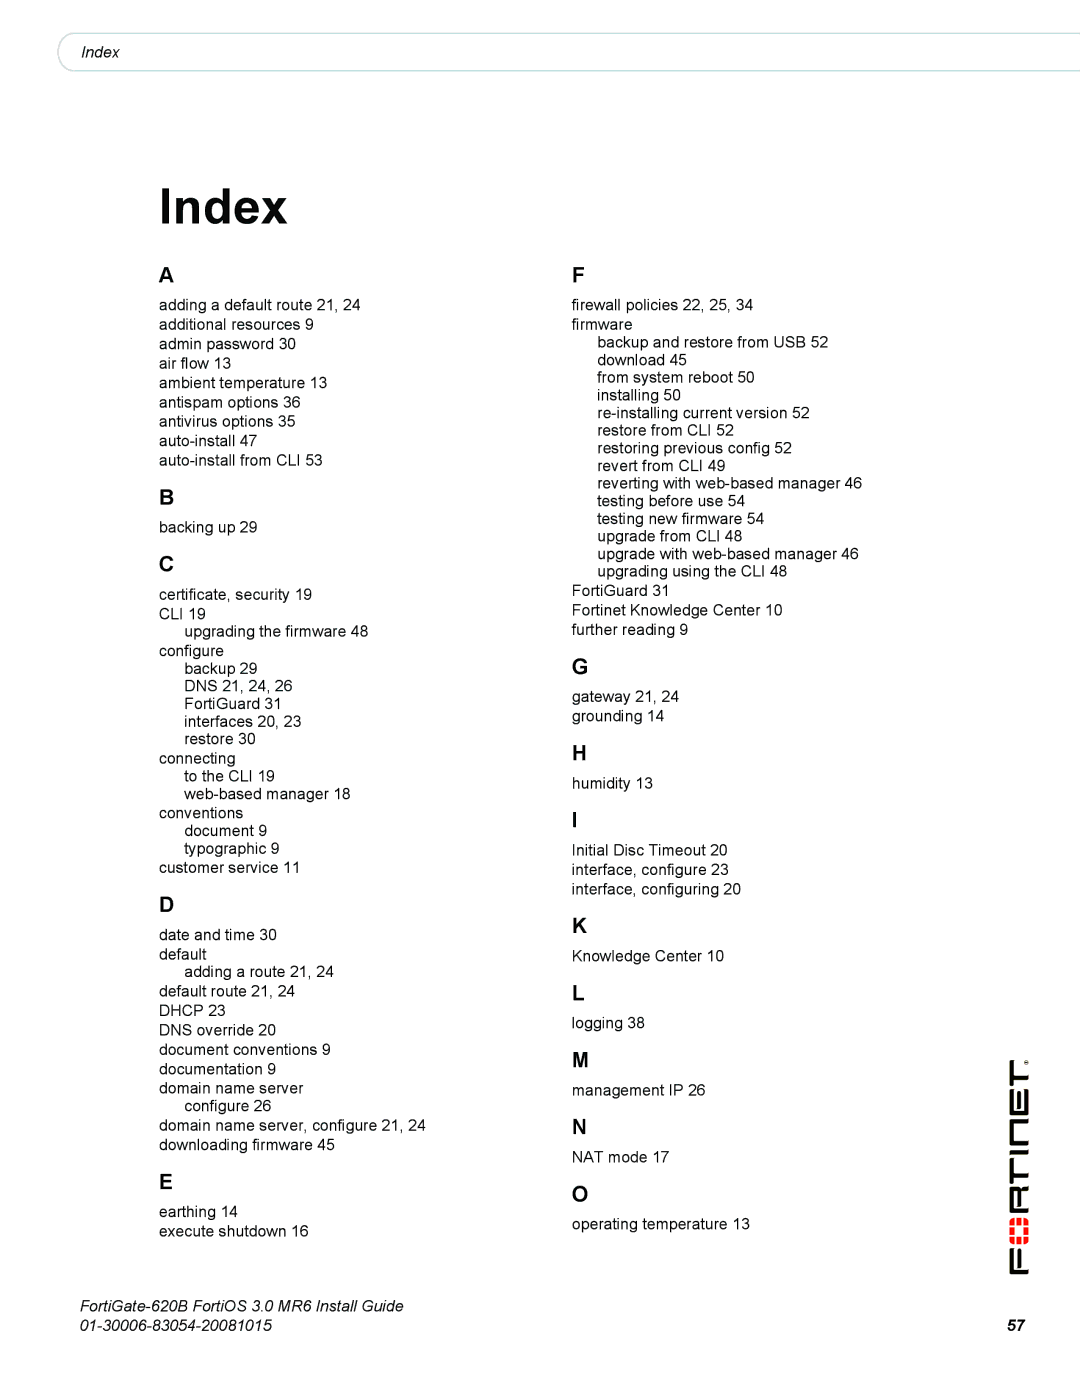 Fortinet 620B manual Index 